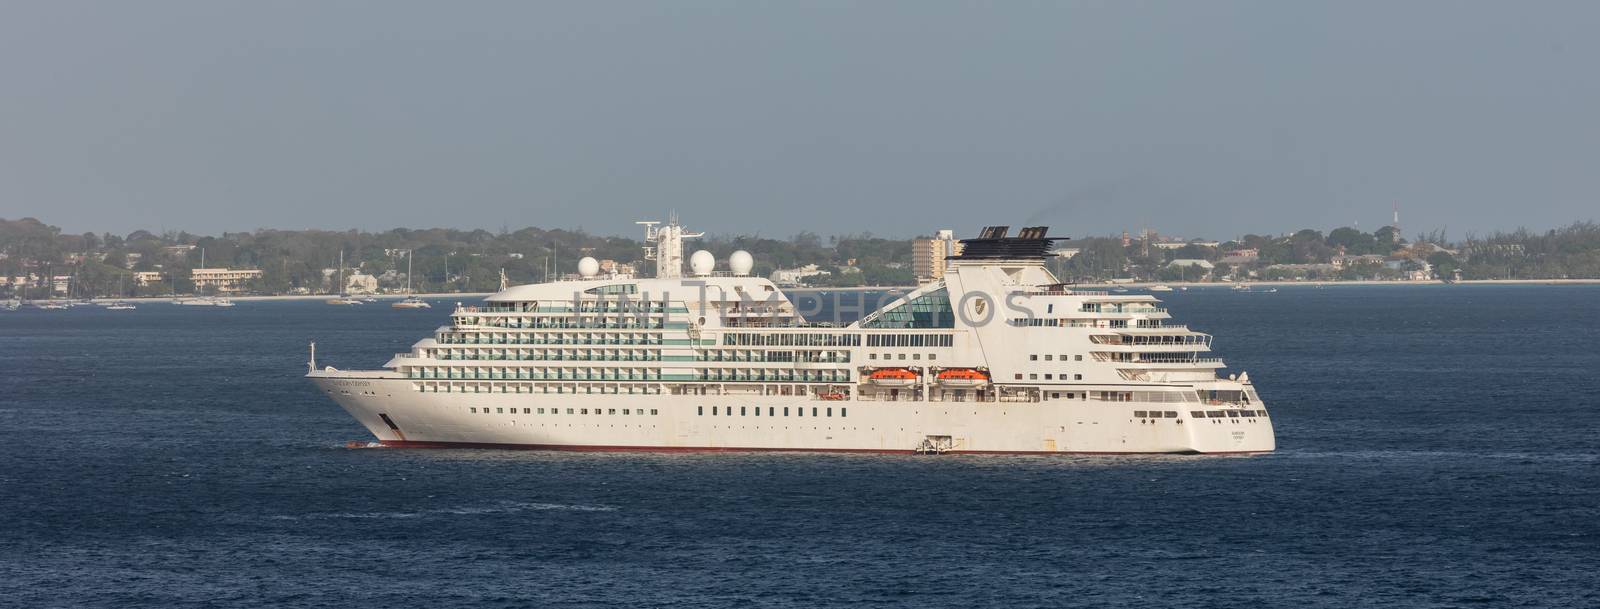 Carlisle Bay, Barbados, West Indies - May 16, 2020: Seabourn Odyssey cruise ship anchored next to Barbados